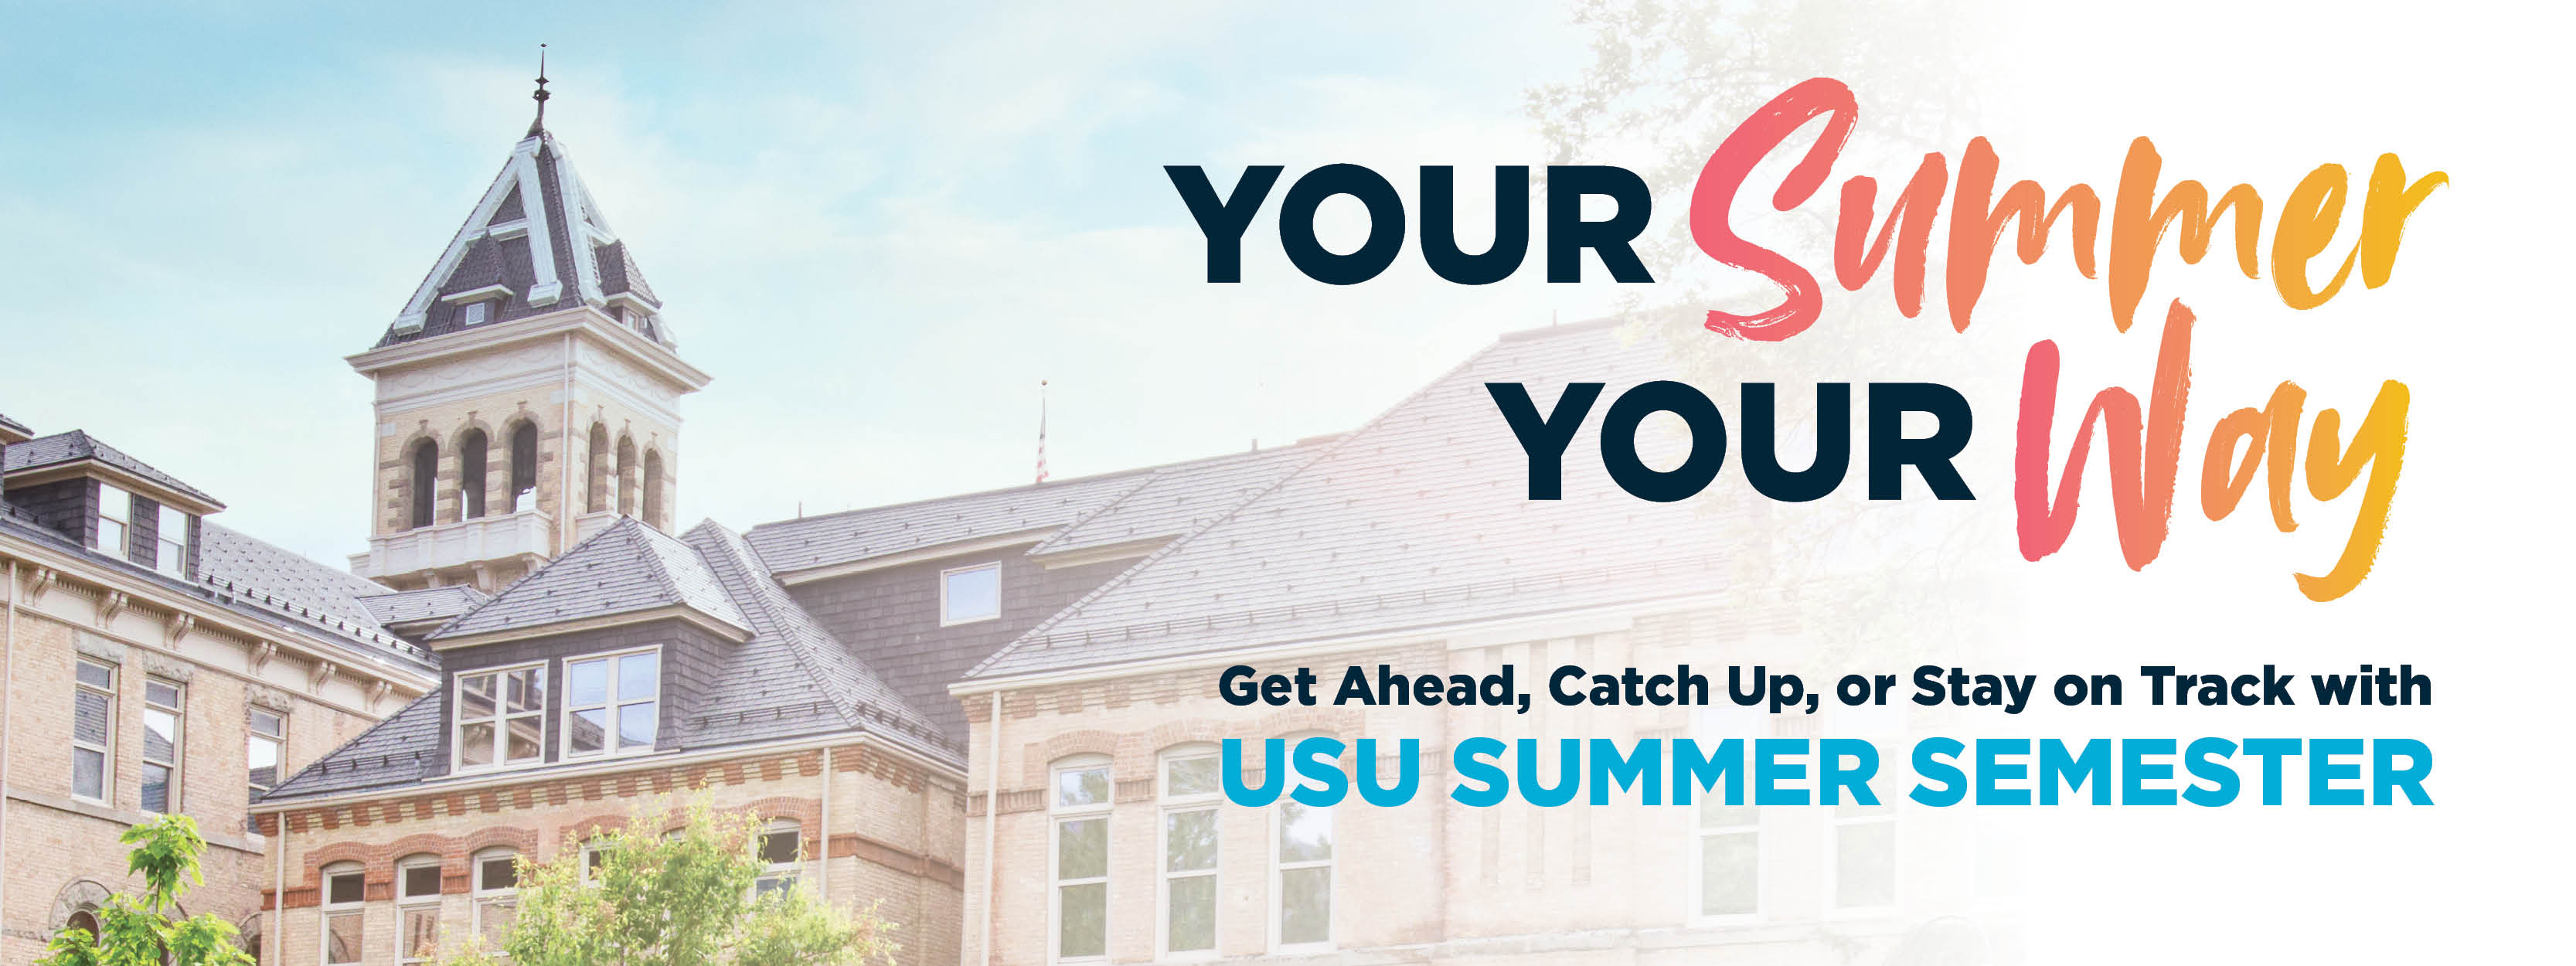 USU summer semester infographic